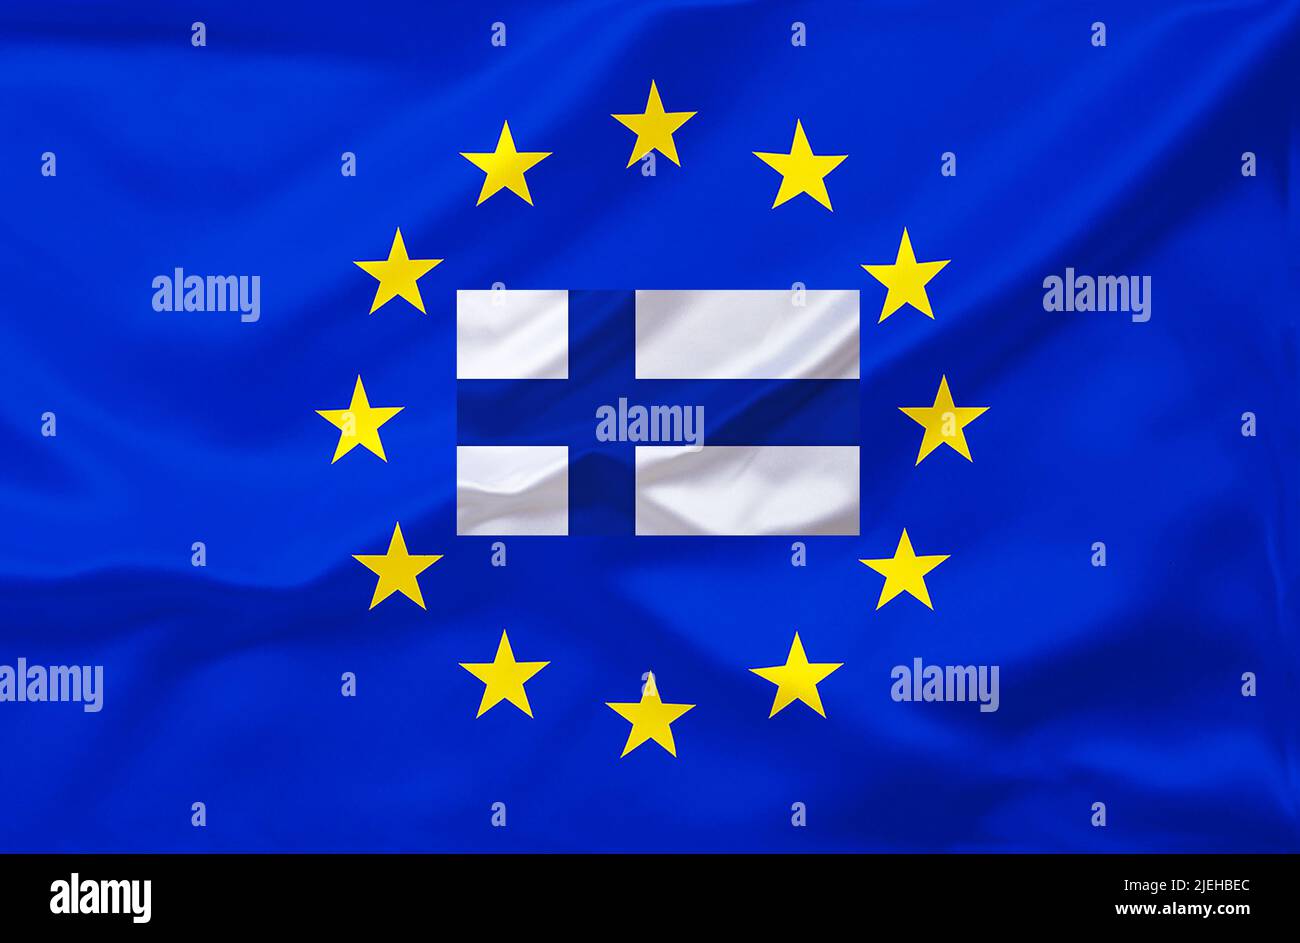 Flagge von Europa, Europäische Fahne Stock Photo - Alamy